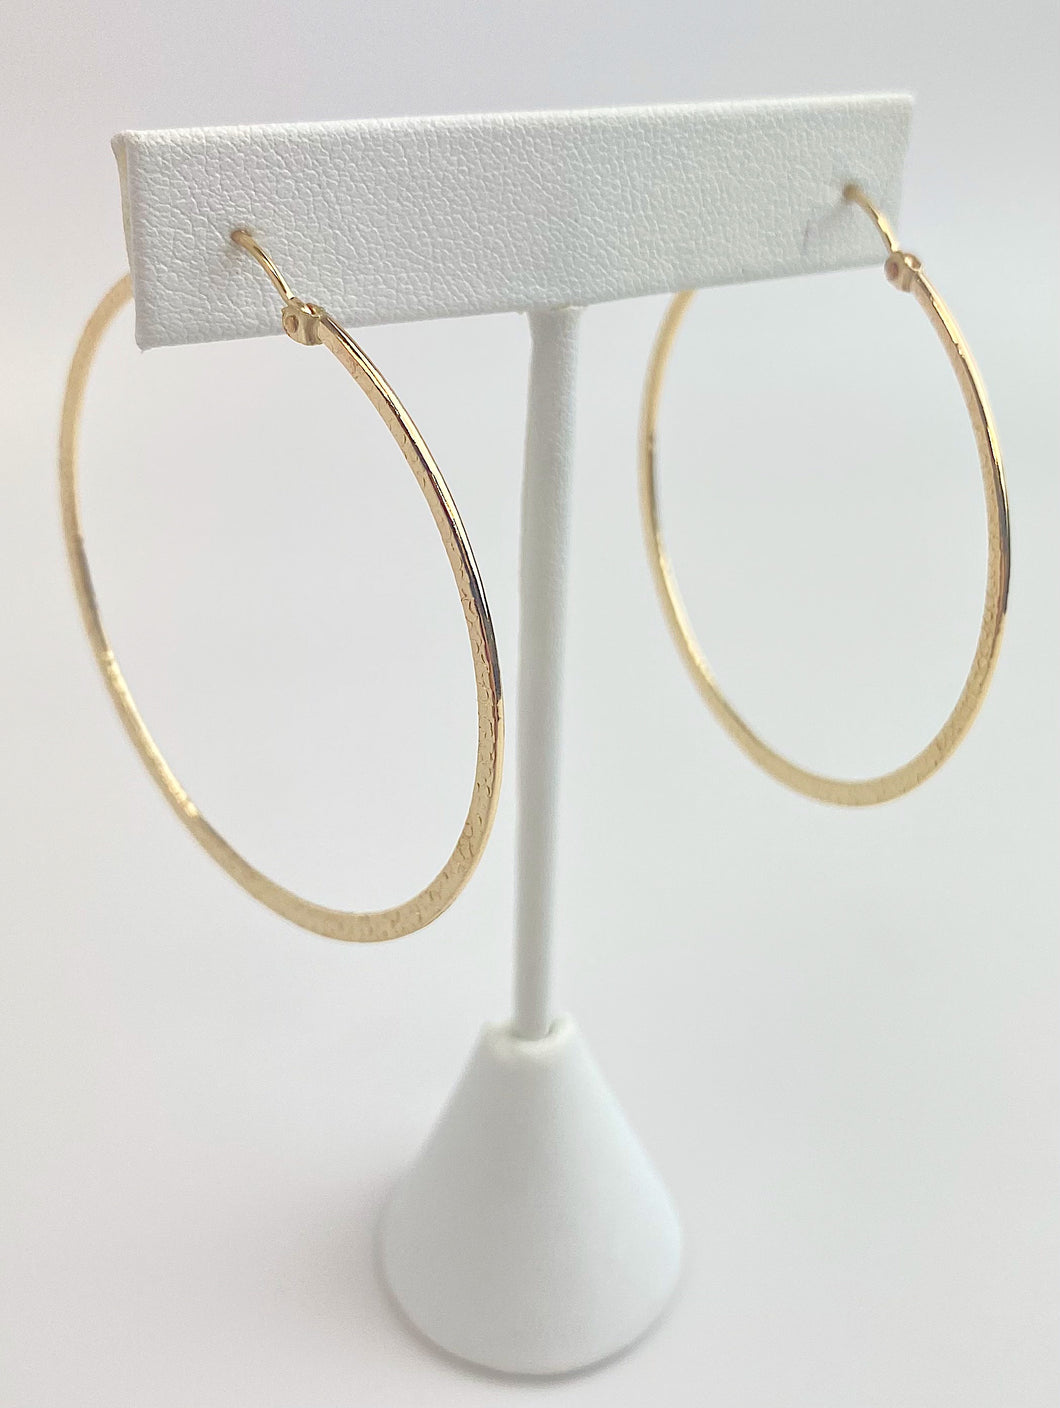 14k Gold Filled Hoop Earrings